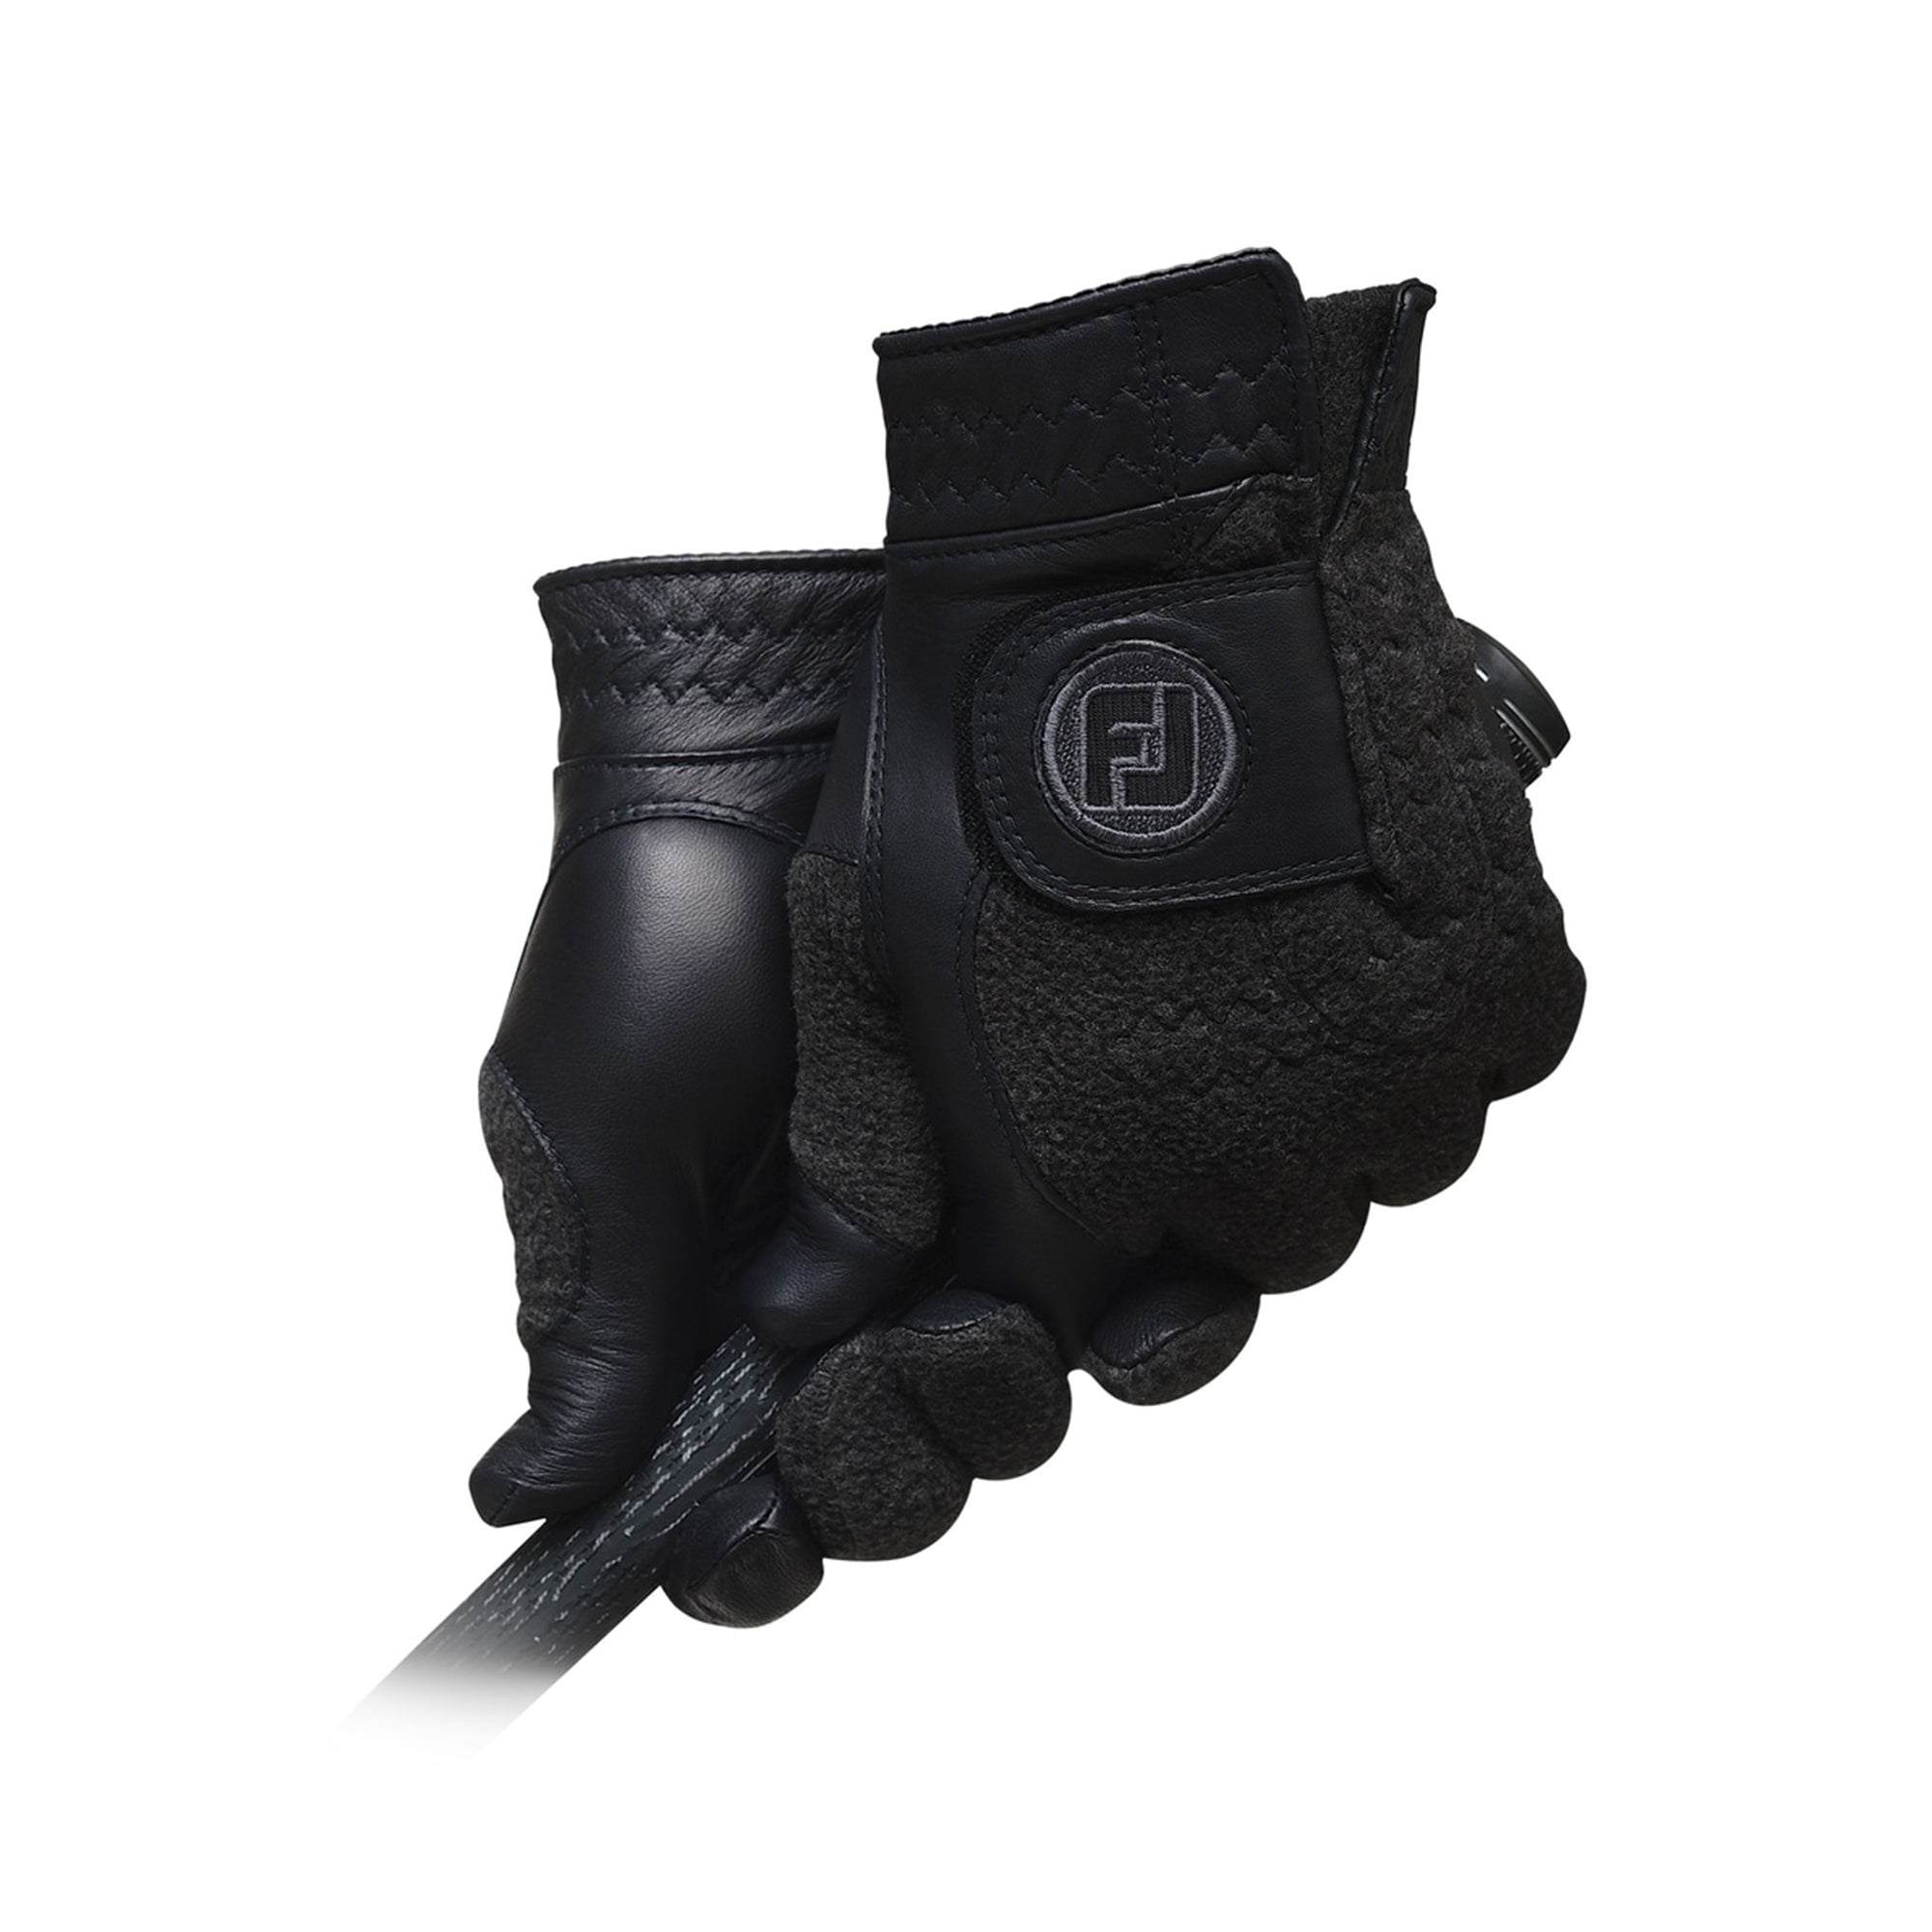 FootJoy StaSof Winter Golf Gloves